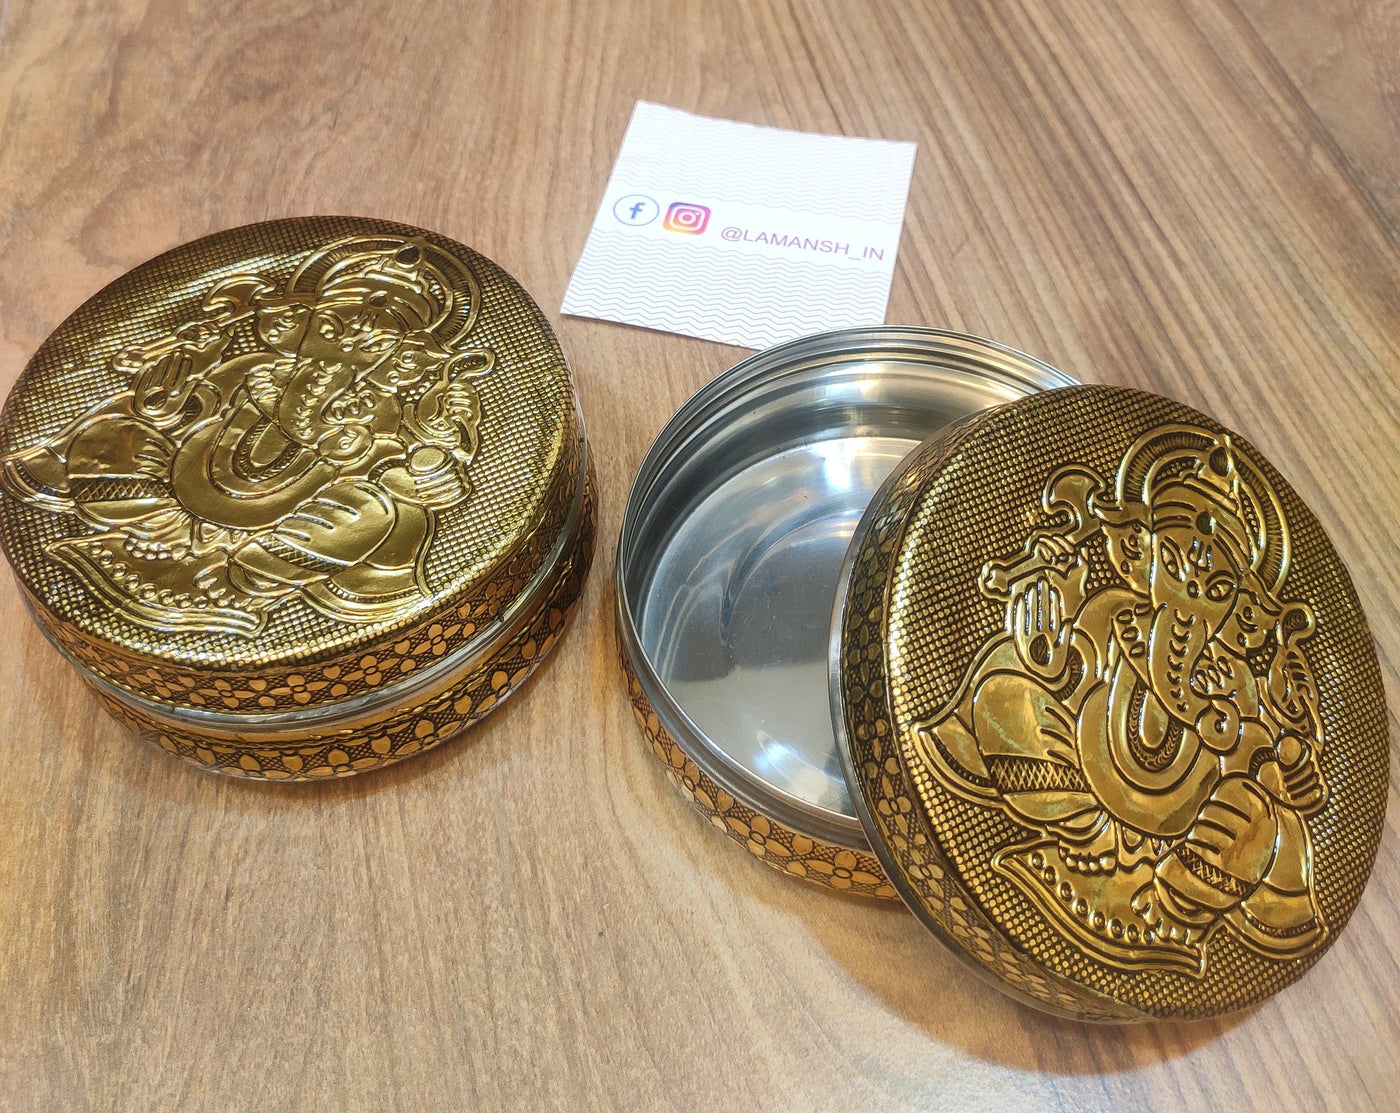 100 Rs each on Purchasing in bulk 📱at 8619550223 steel gift box PREORDER 🏷 - LAMANSH® Ganpati 🕉Meenakari work steel gift 🎁 boxes for Ganesh Chaturthi & Diwali